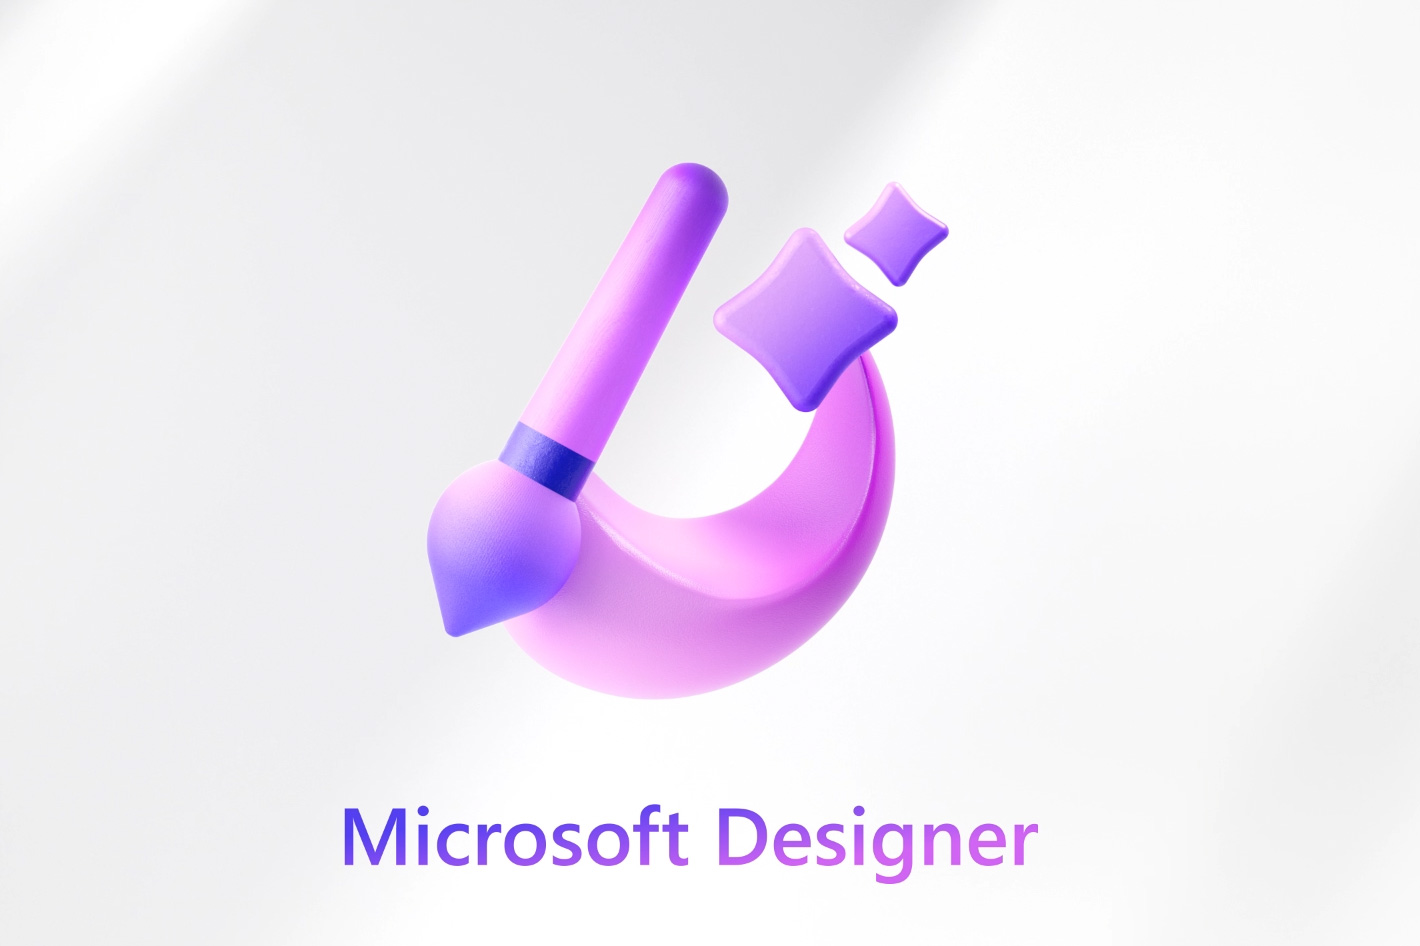 Microsoft Designer: a DTP tool powered by AI